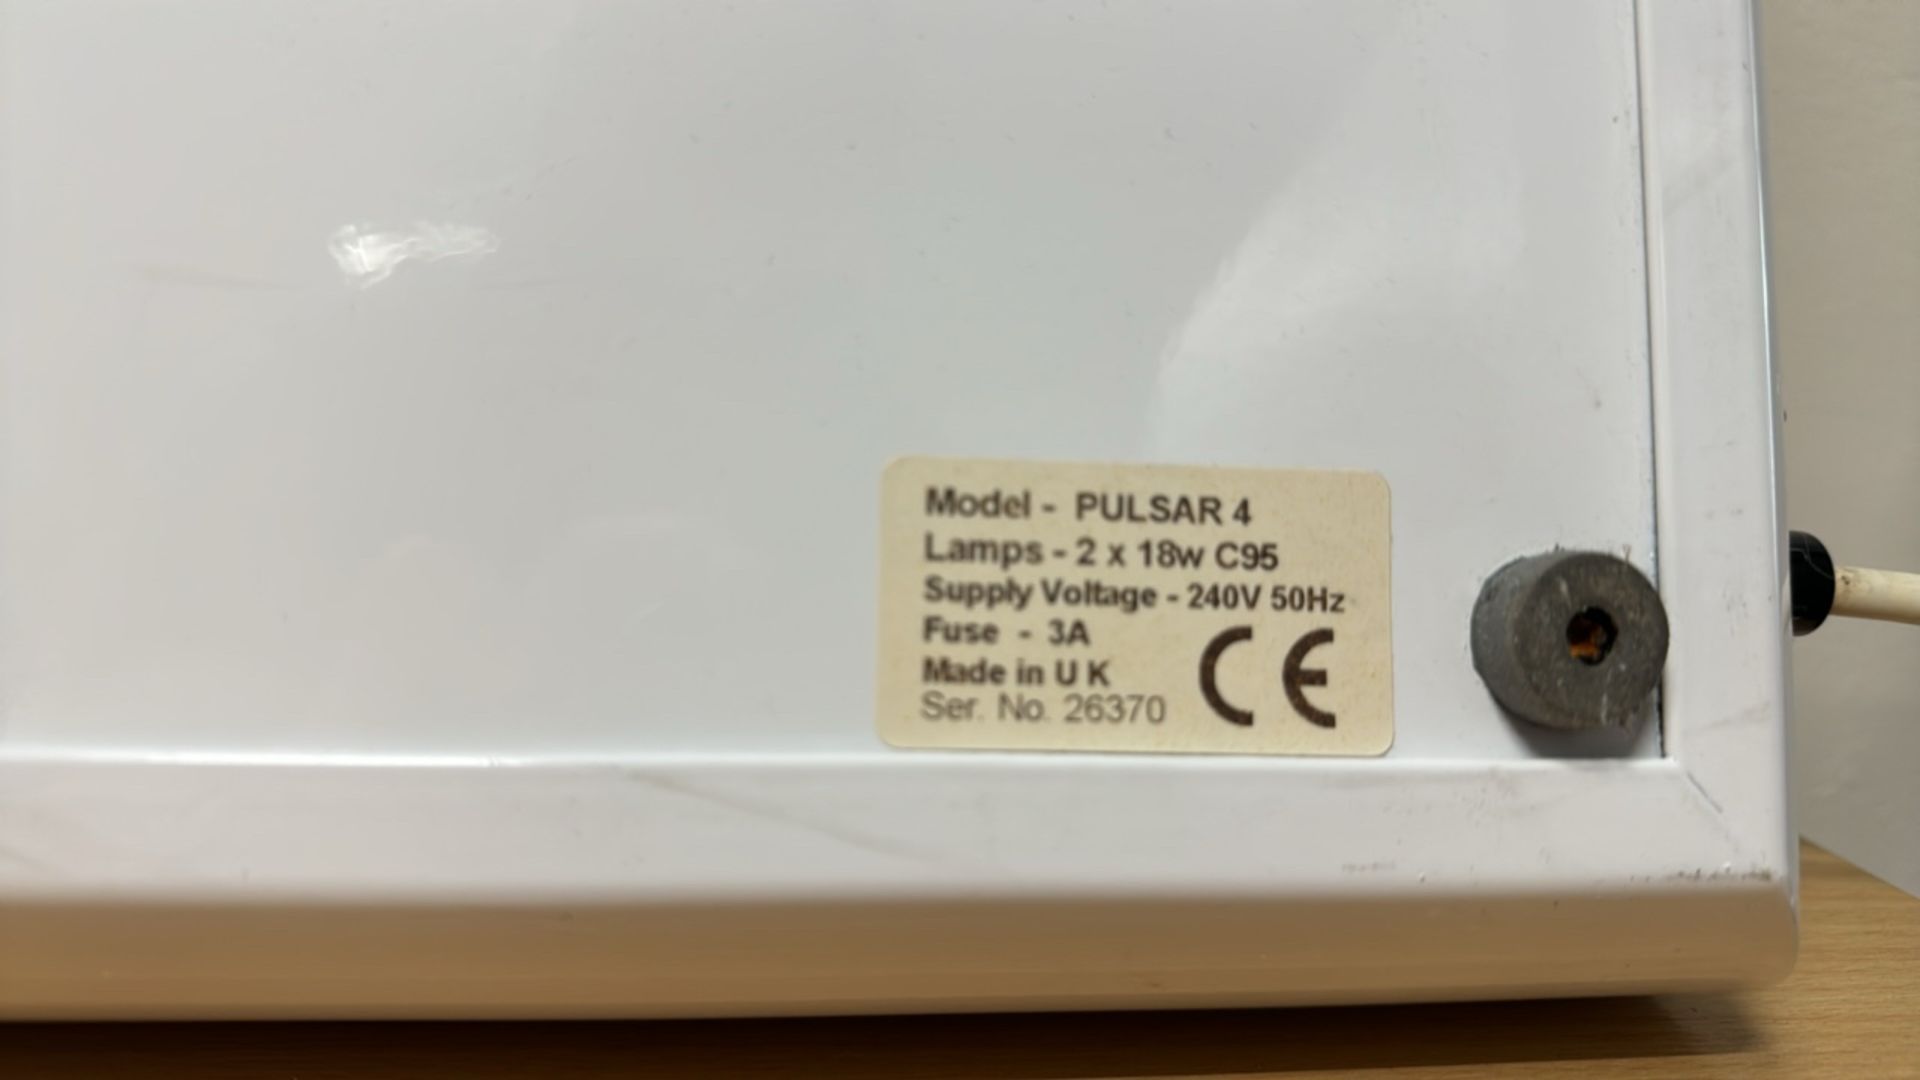 Pulsar 4 Light Box - Image 5 of 5